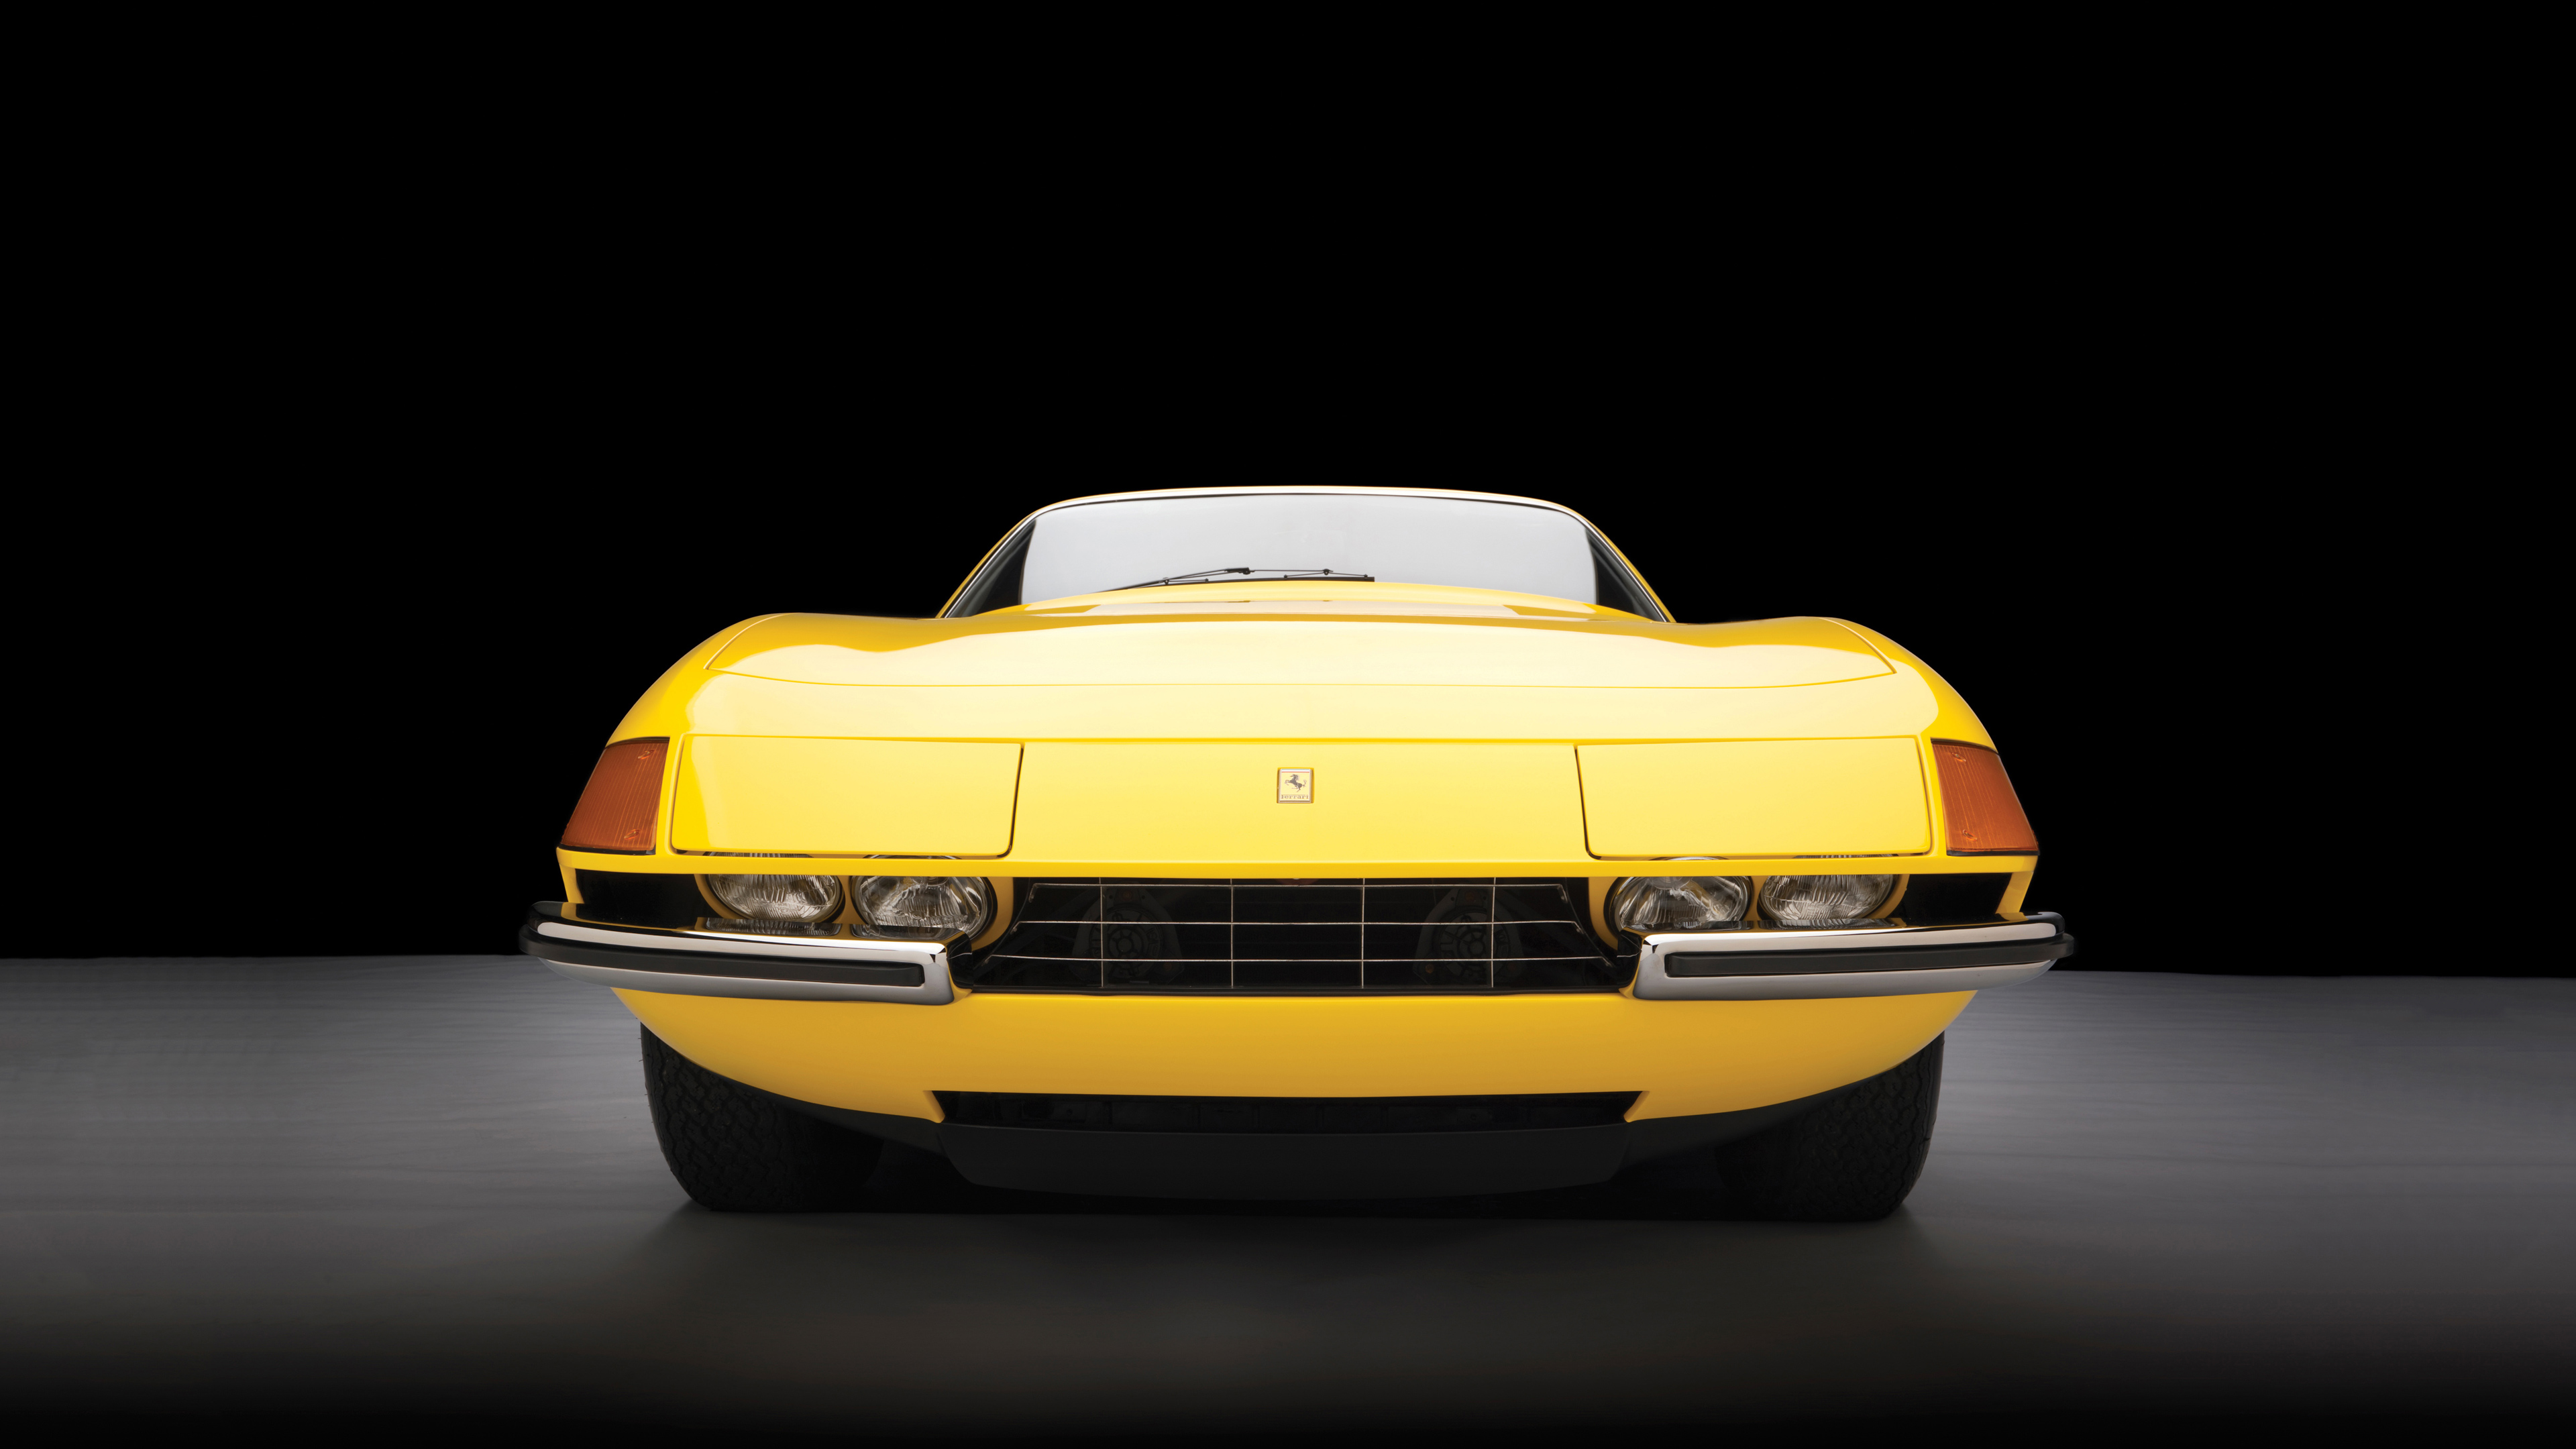 Ferrari 365 GTS Daytona 4k, HD Cars, 4k Wallpaper, Image, Background, Photo and Picture